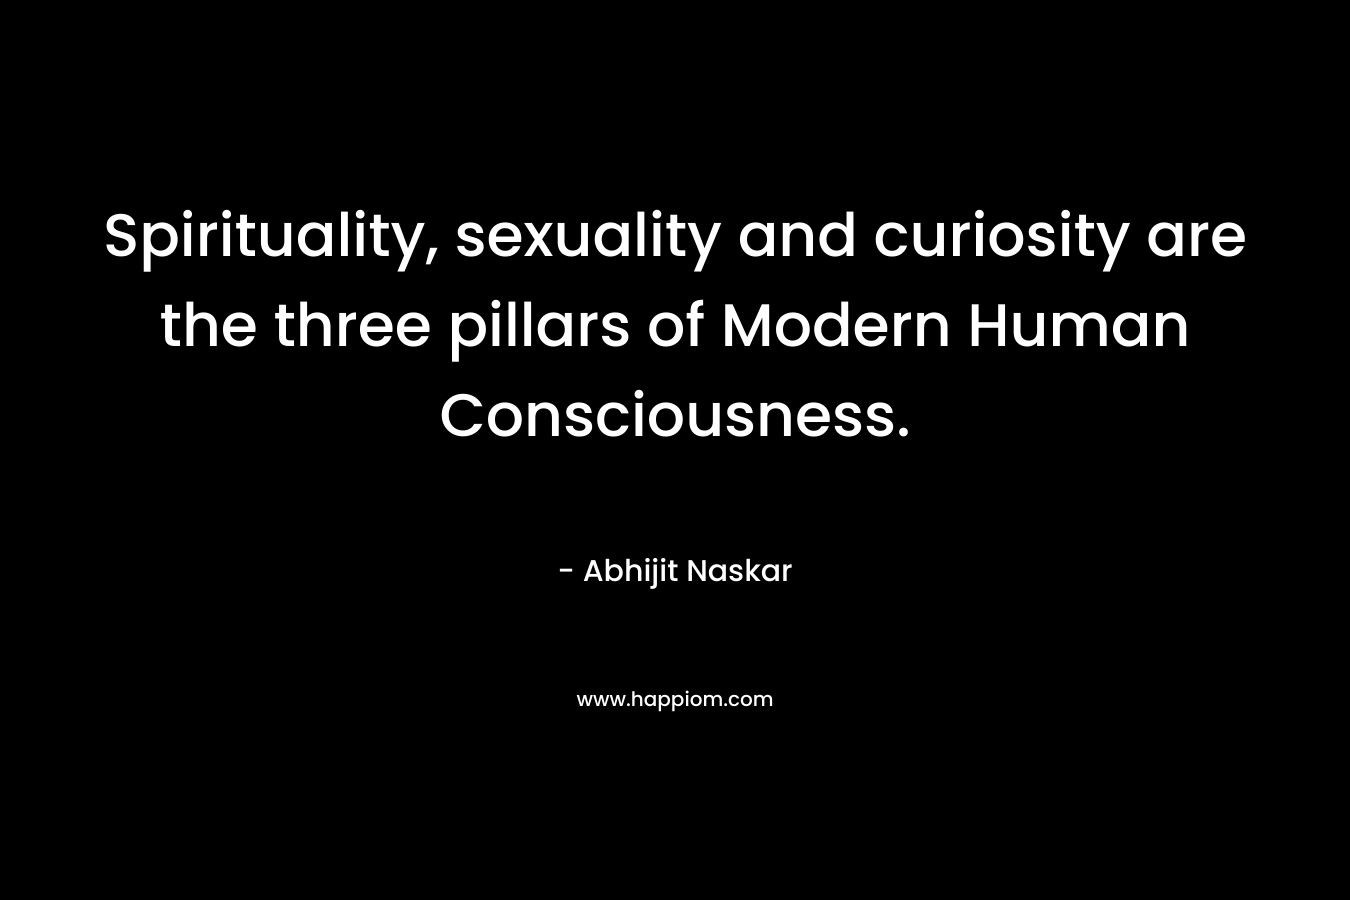 Spirituality, sexuality and curiosity are the three pillars of Modern Human Consciousness. – Abhijit Naskar